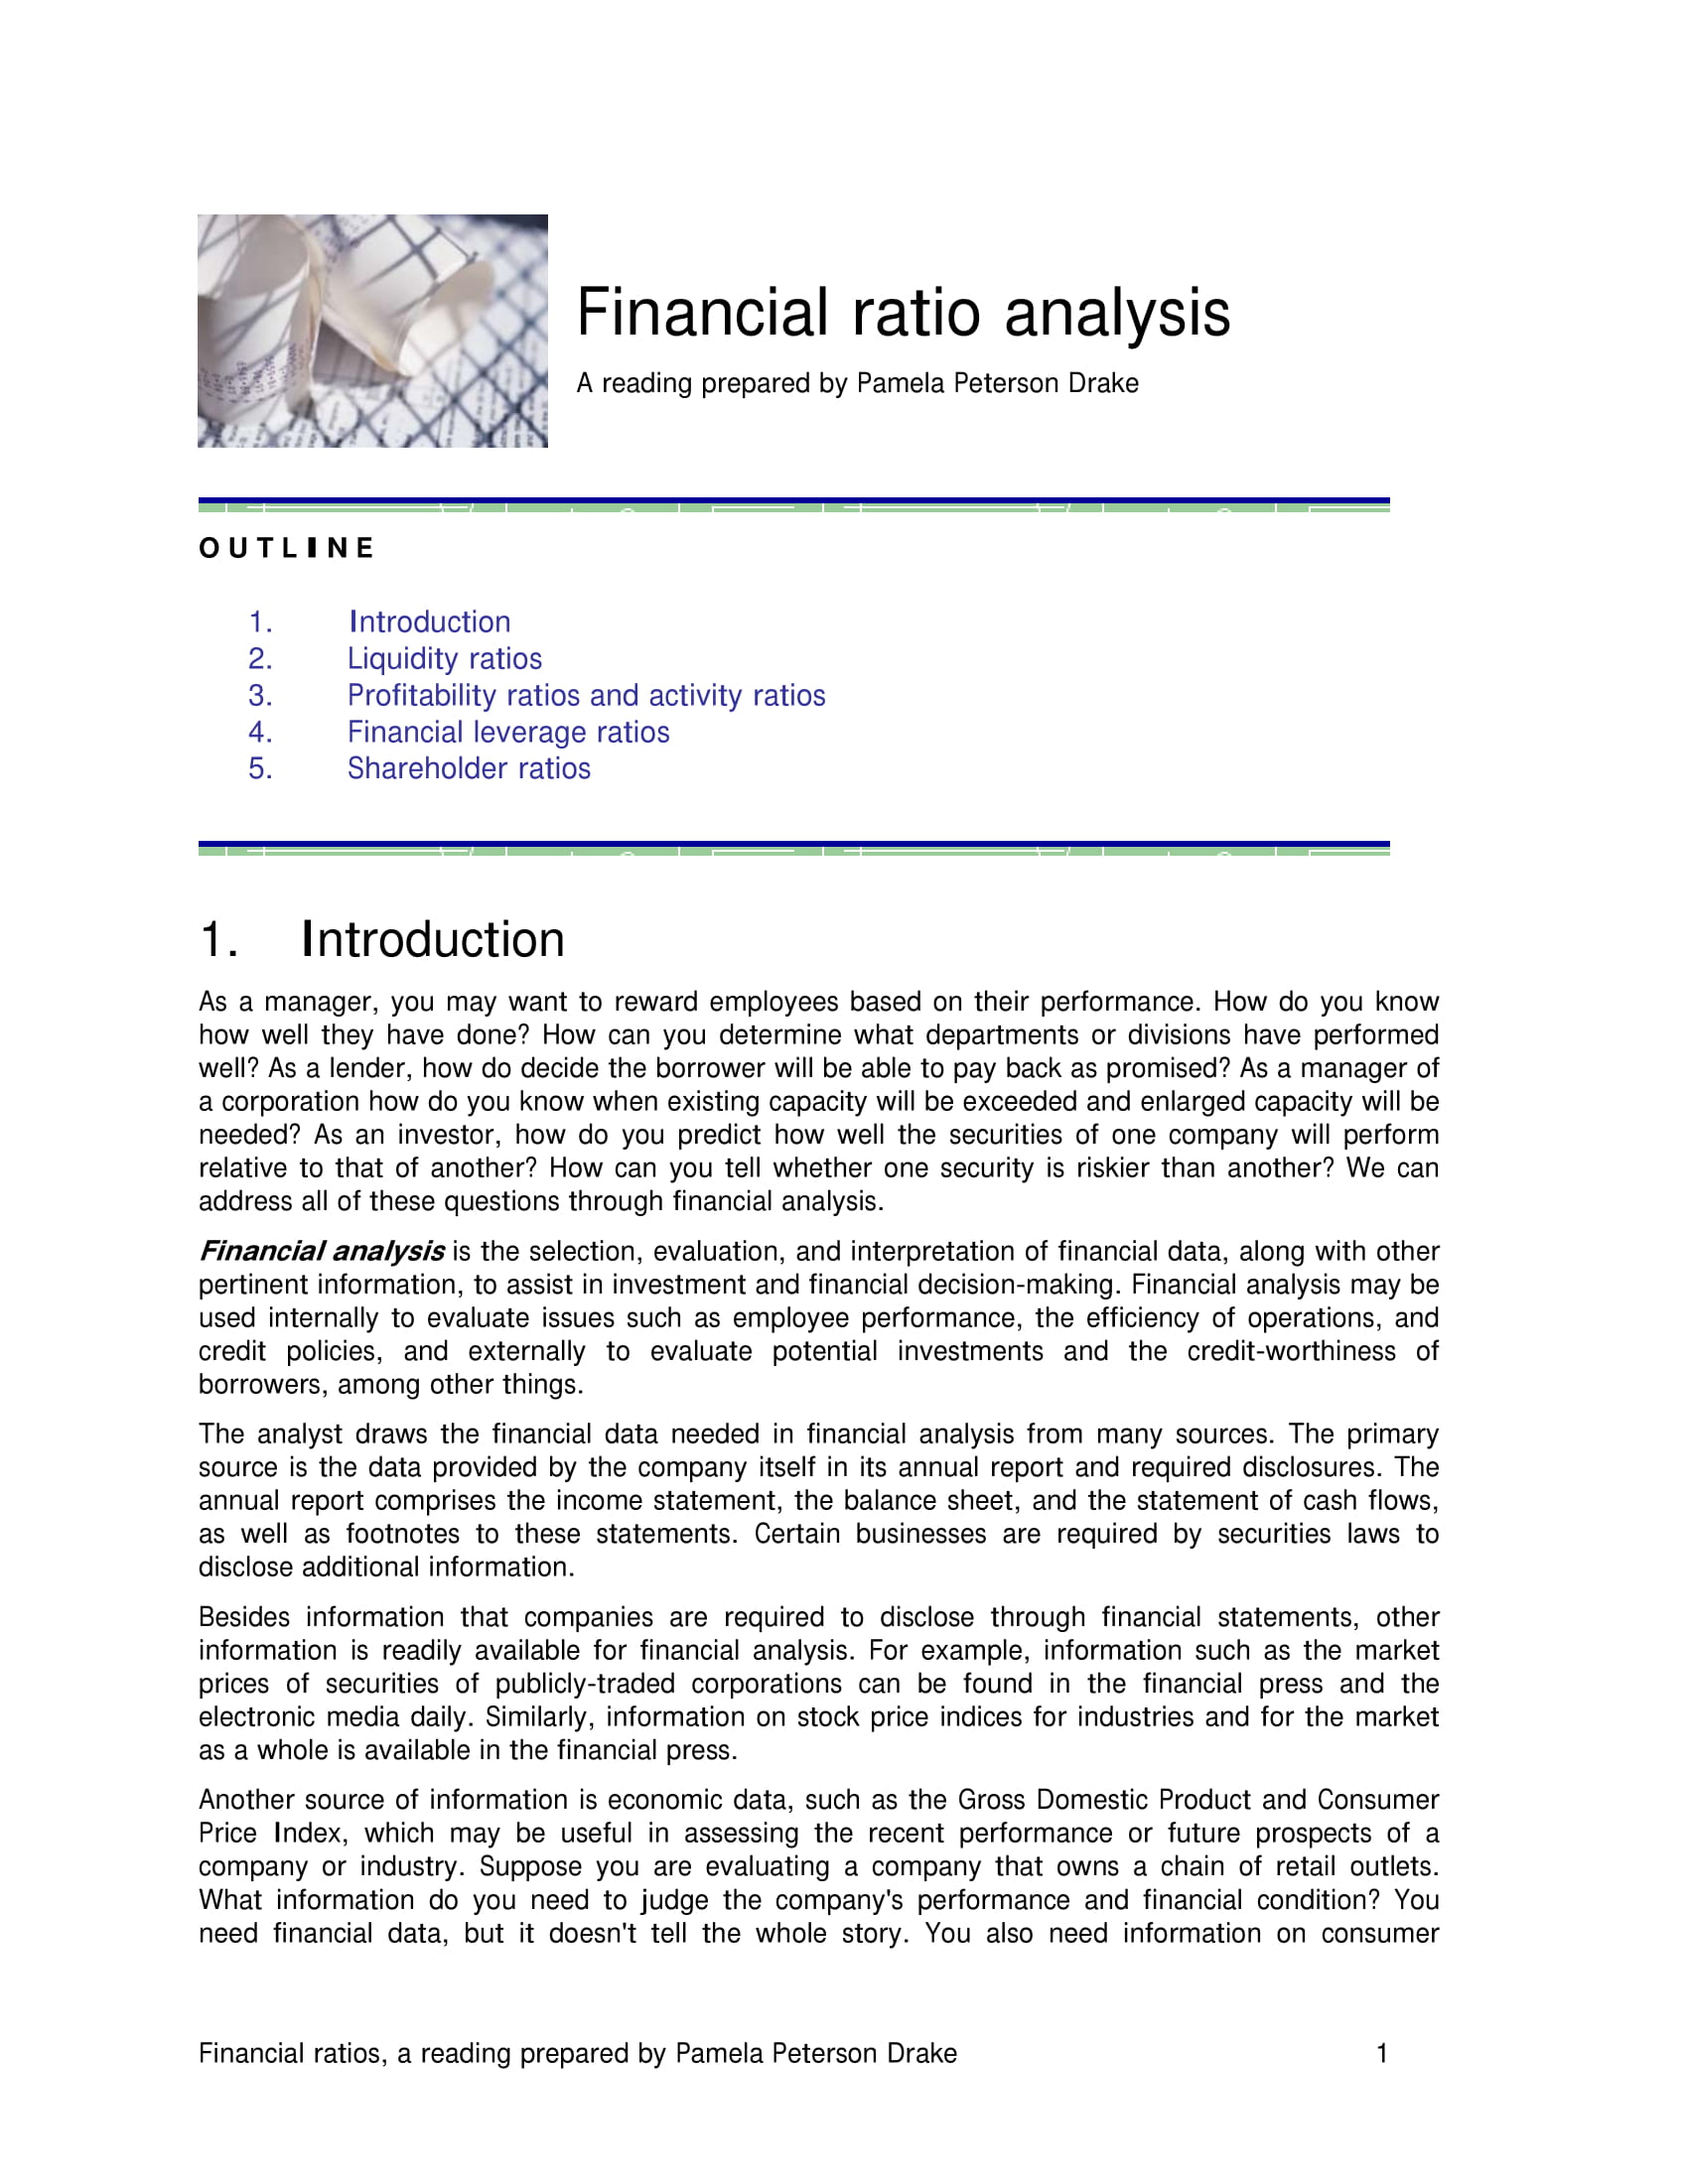 corporate financial ratio analysis example 01